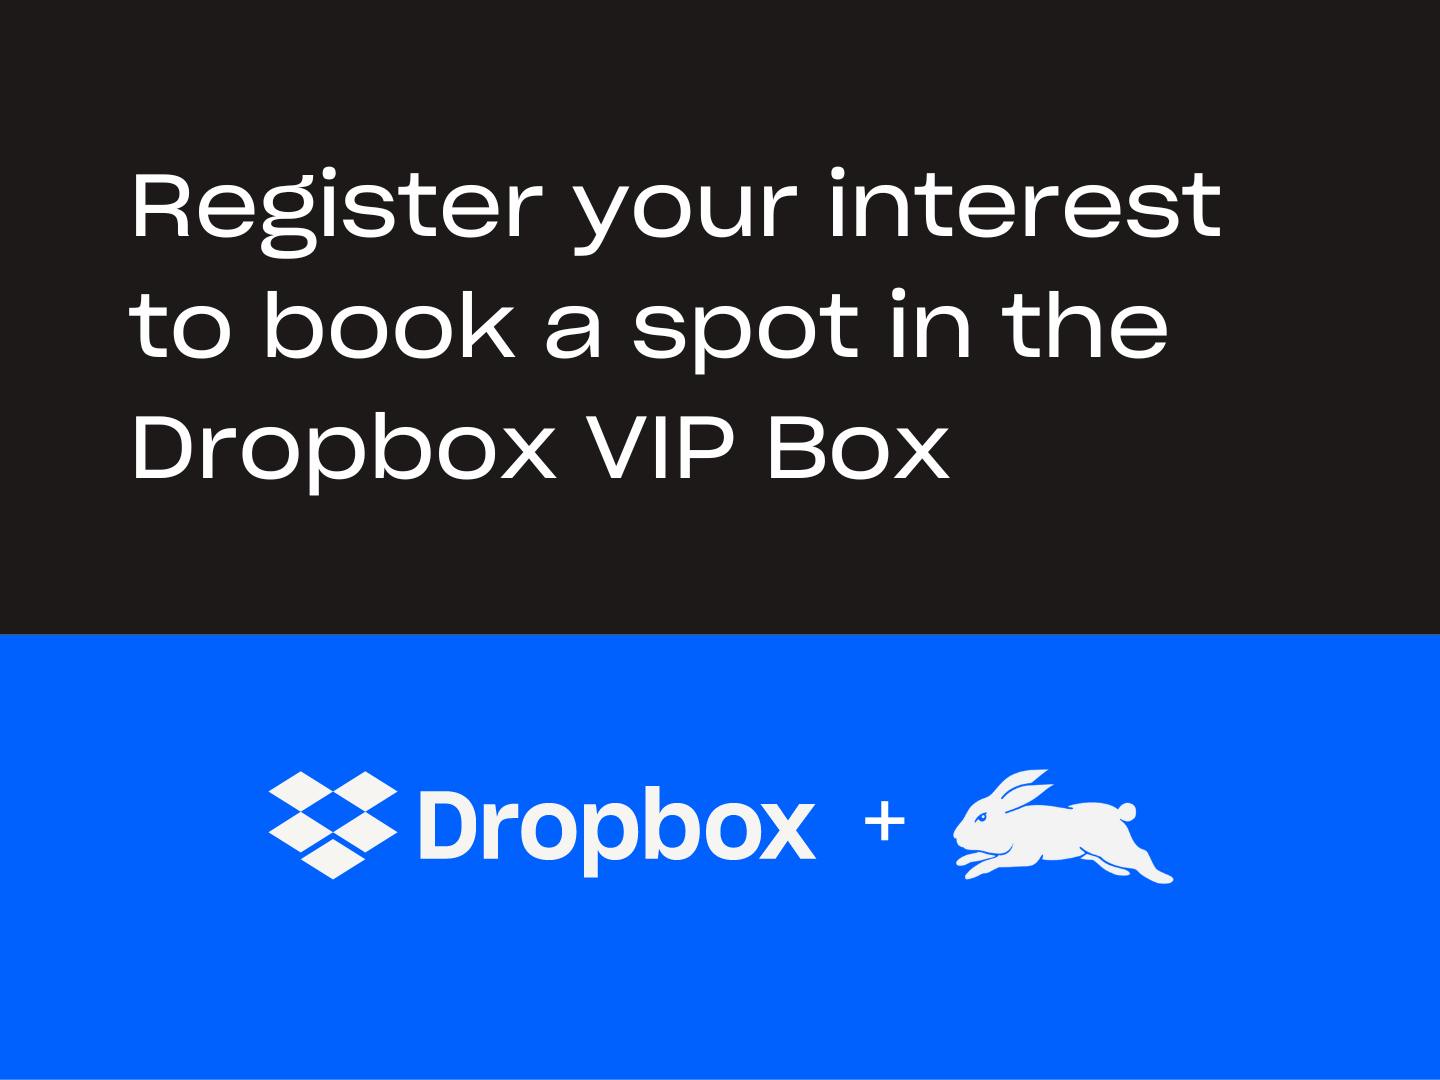 Dropbox VIP Box - Expressions of Interest